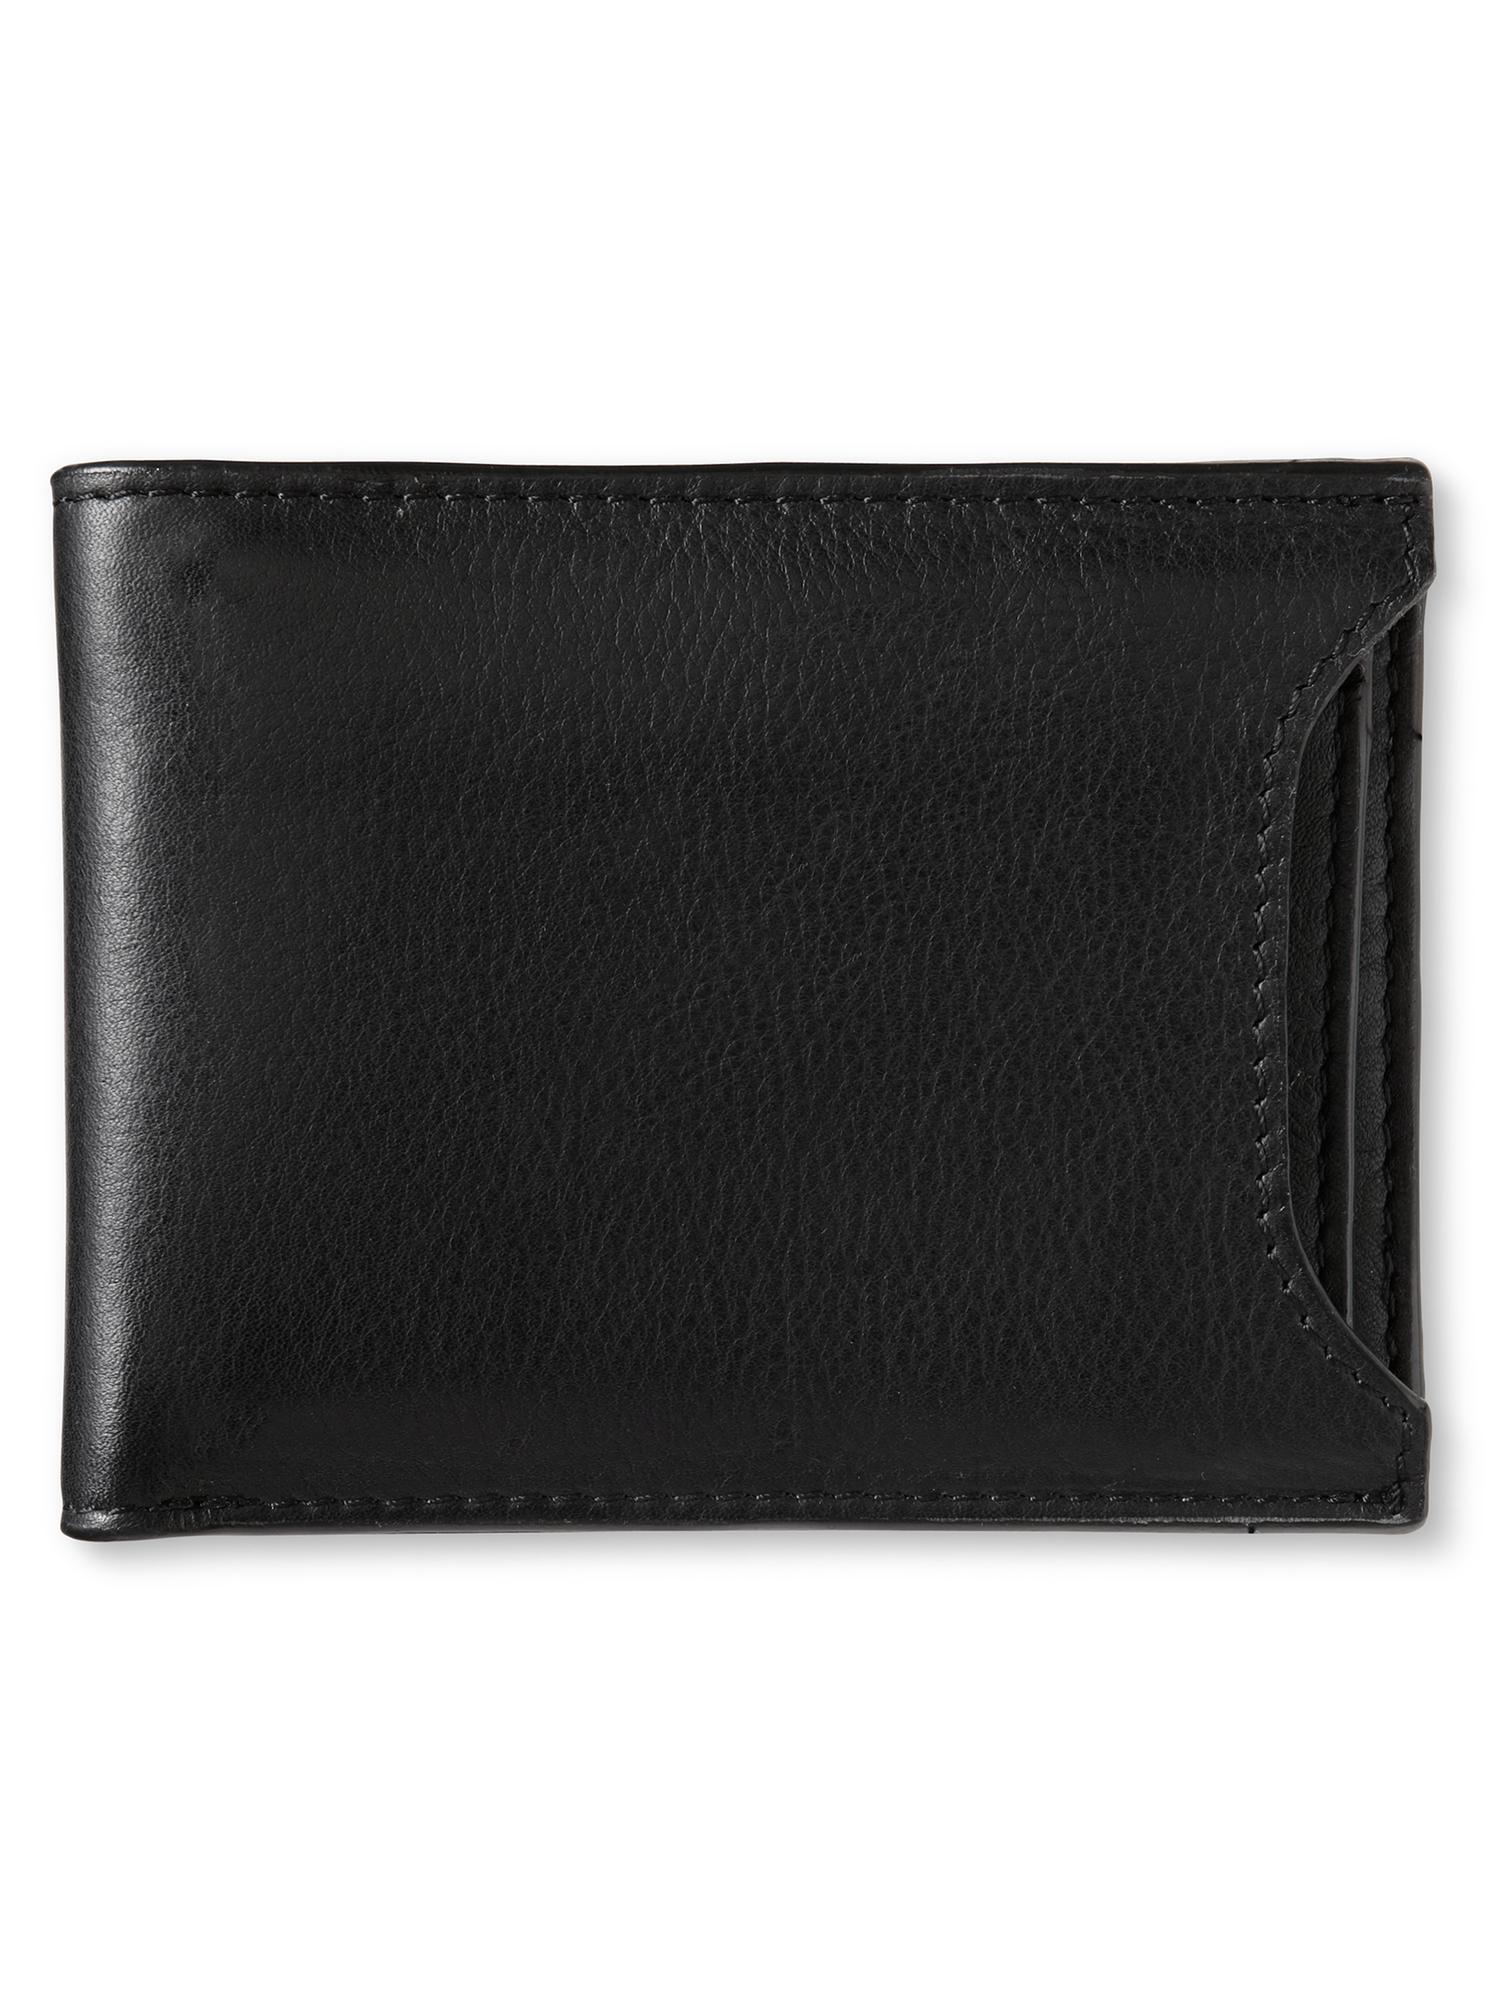 Leather Dress Wallet